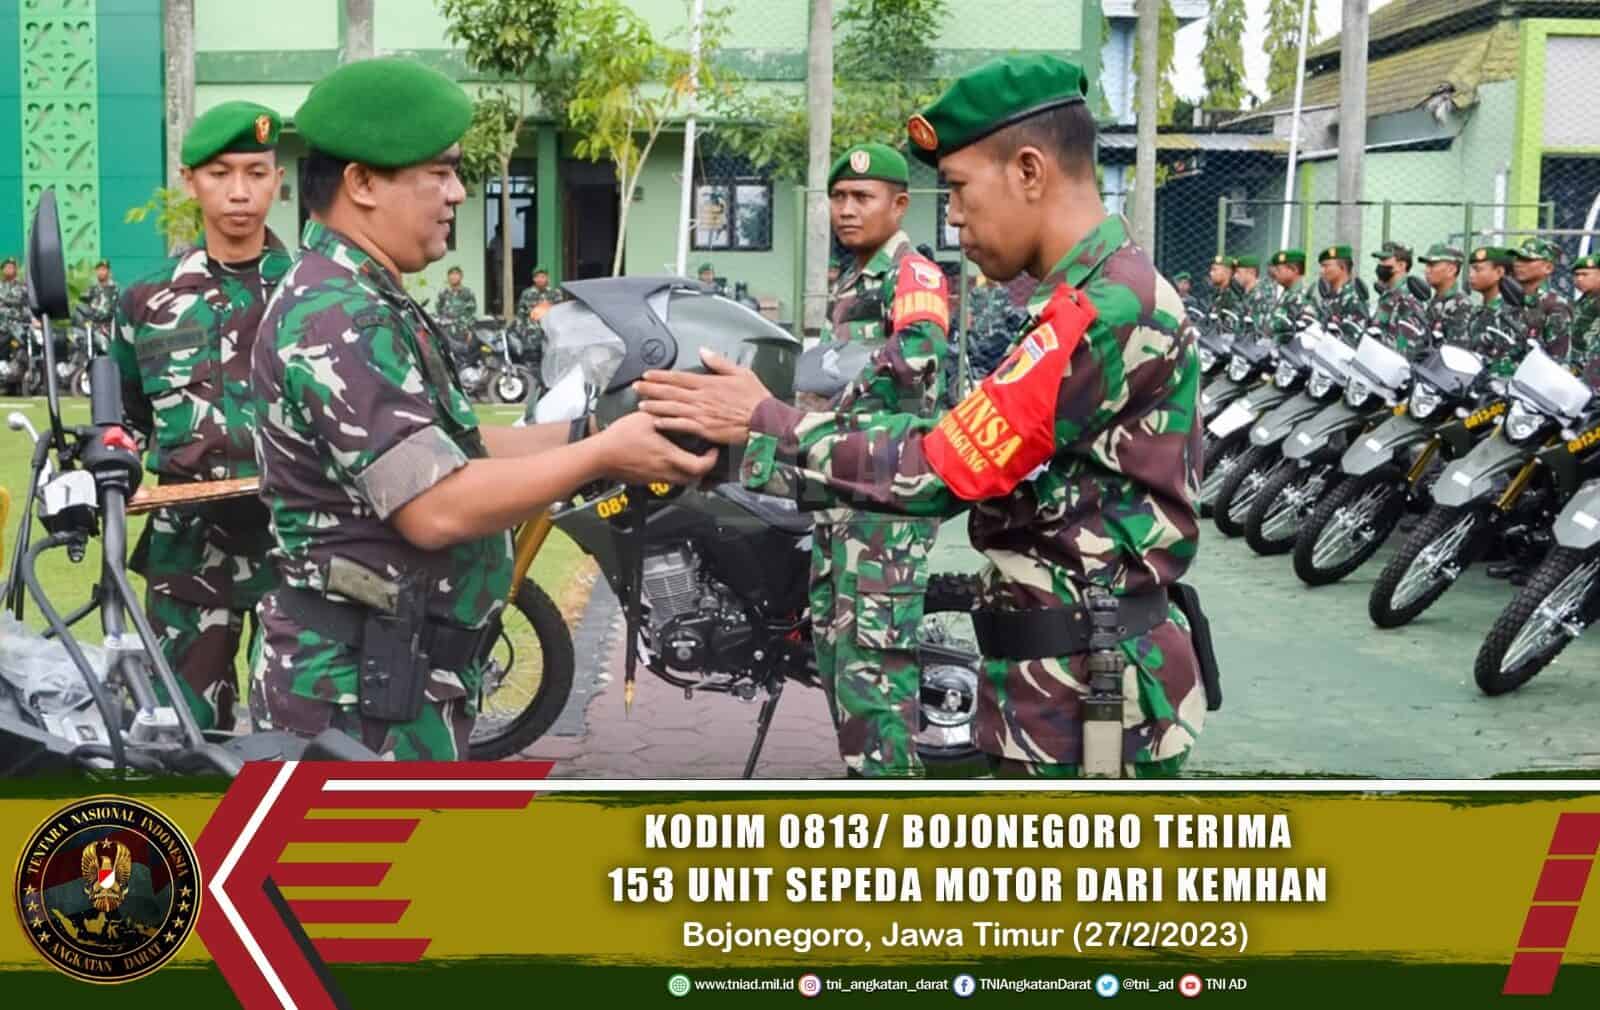 Kodim 0813/ Bojonegoro Terima 153 Unit Sepeda Motor dari Kemhan